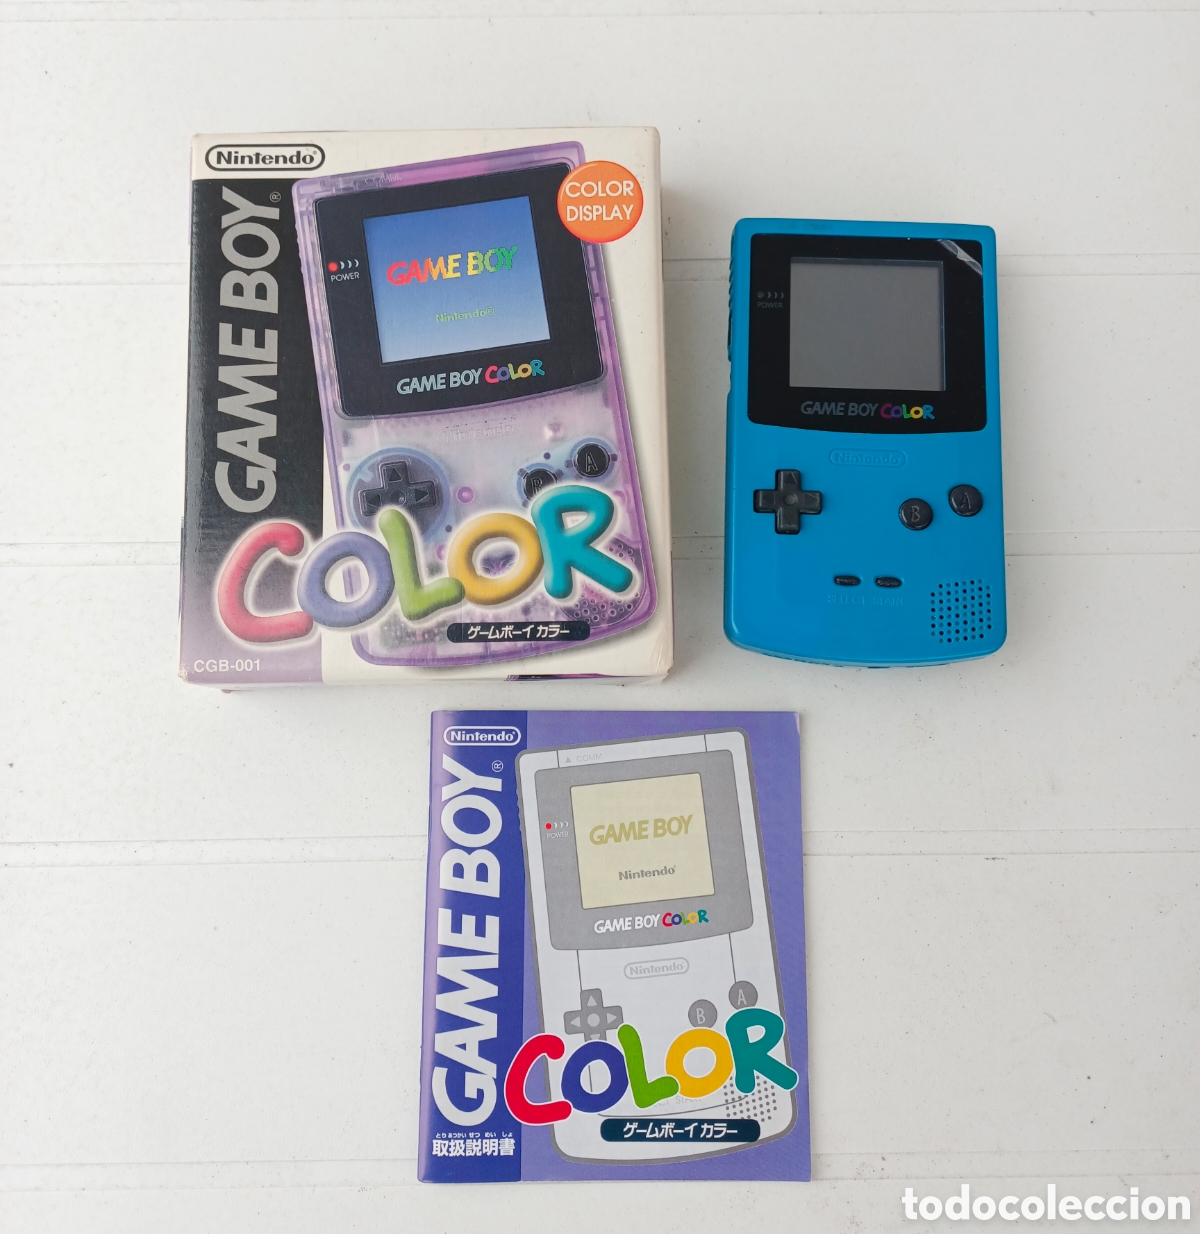 gameboy game boy color en caja original y instr - Acheter Jeux